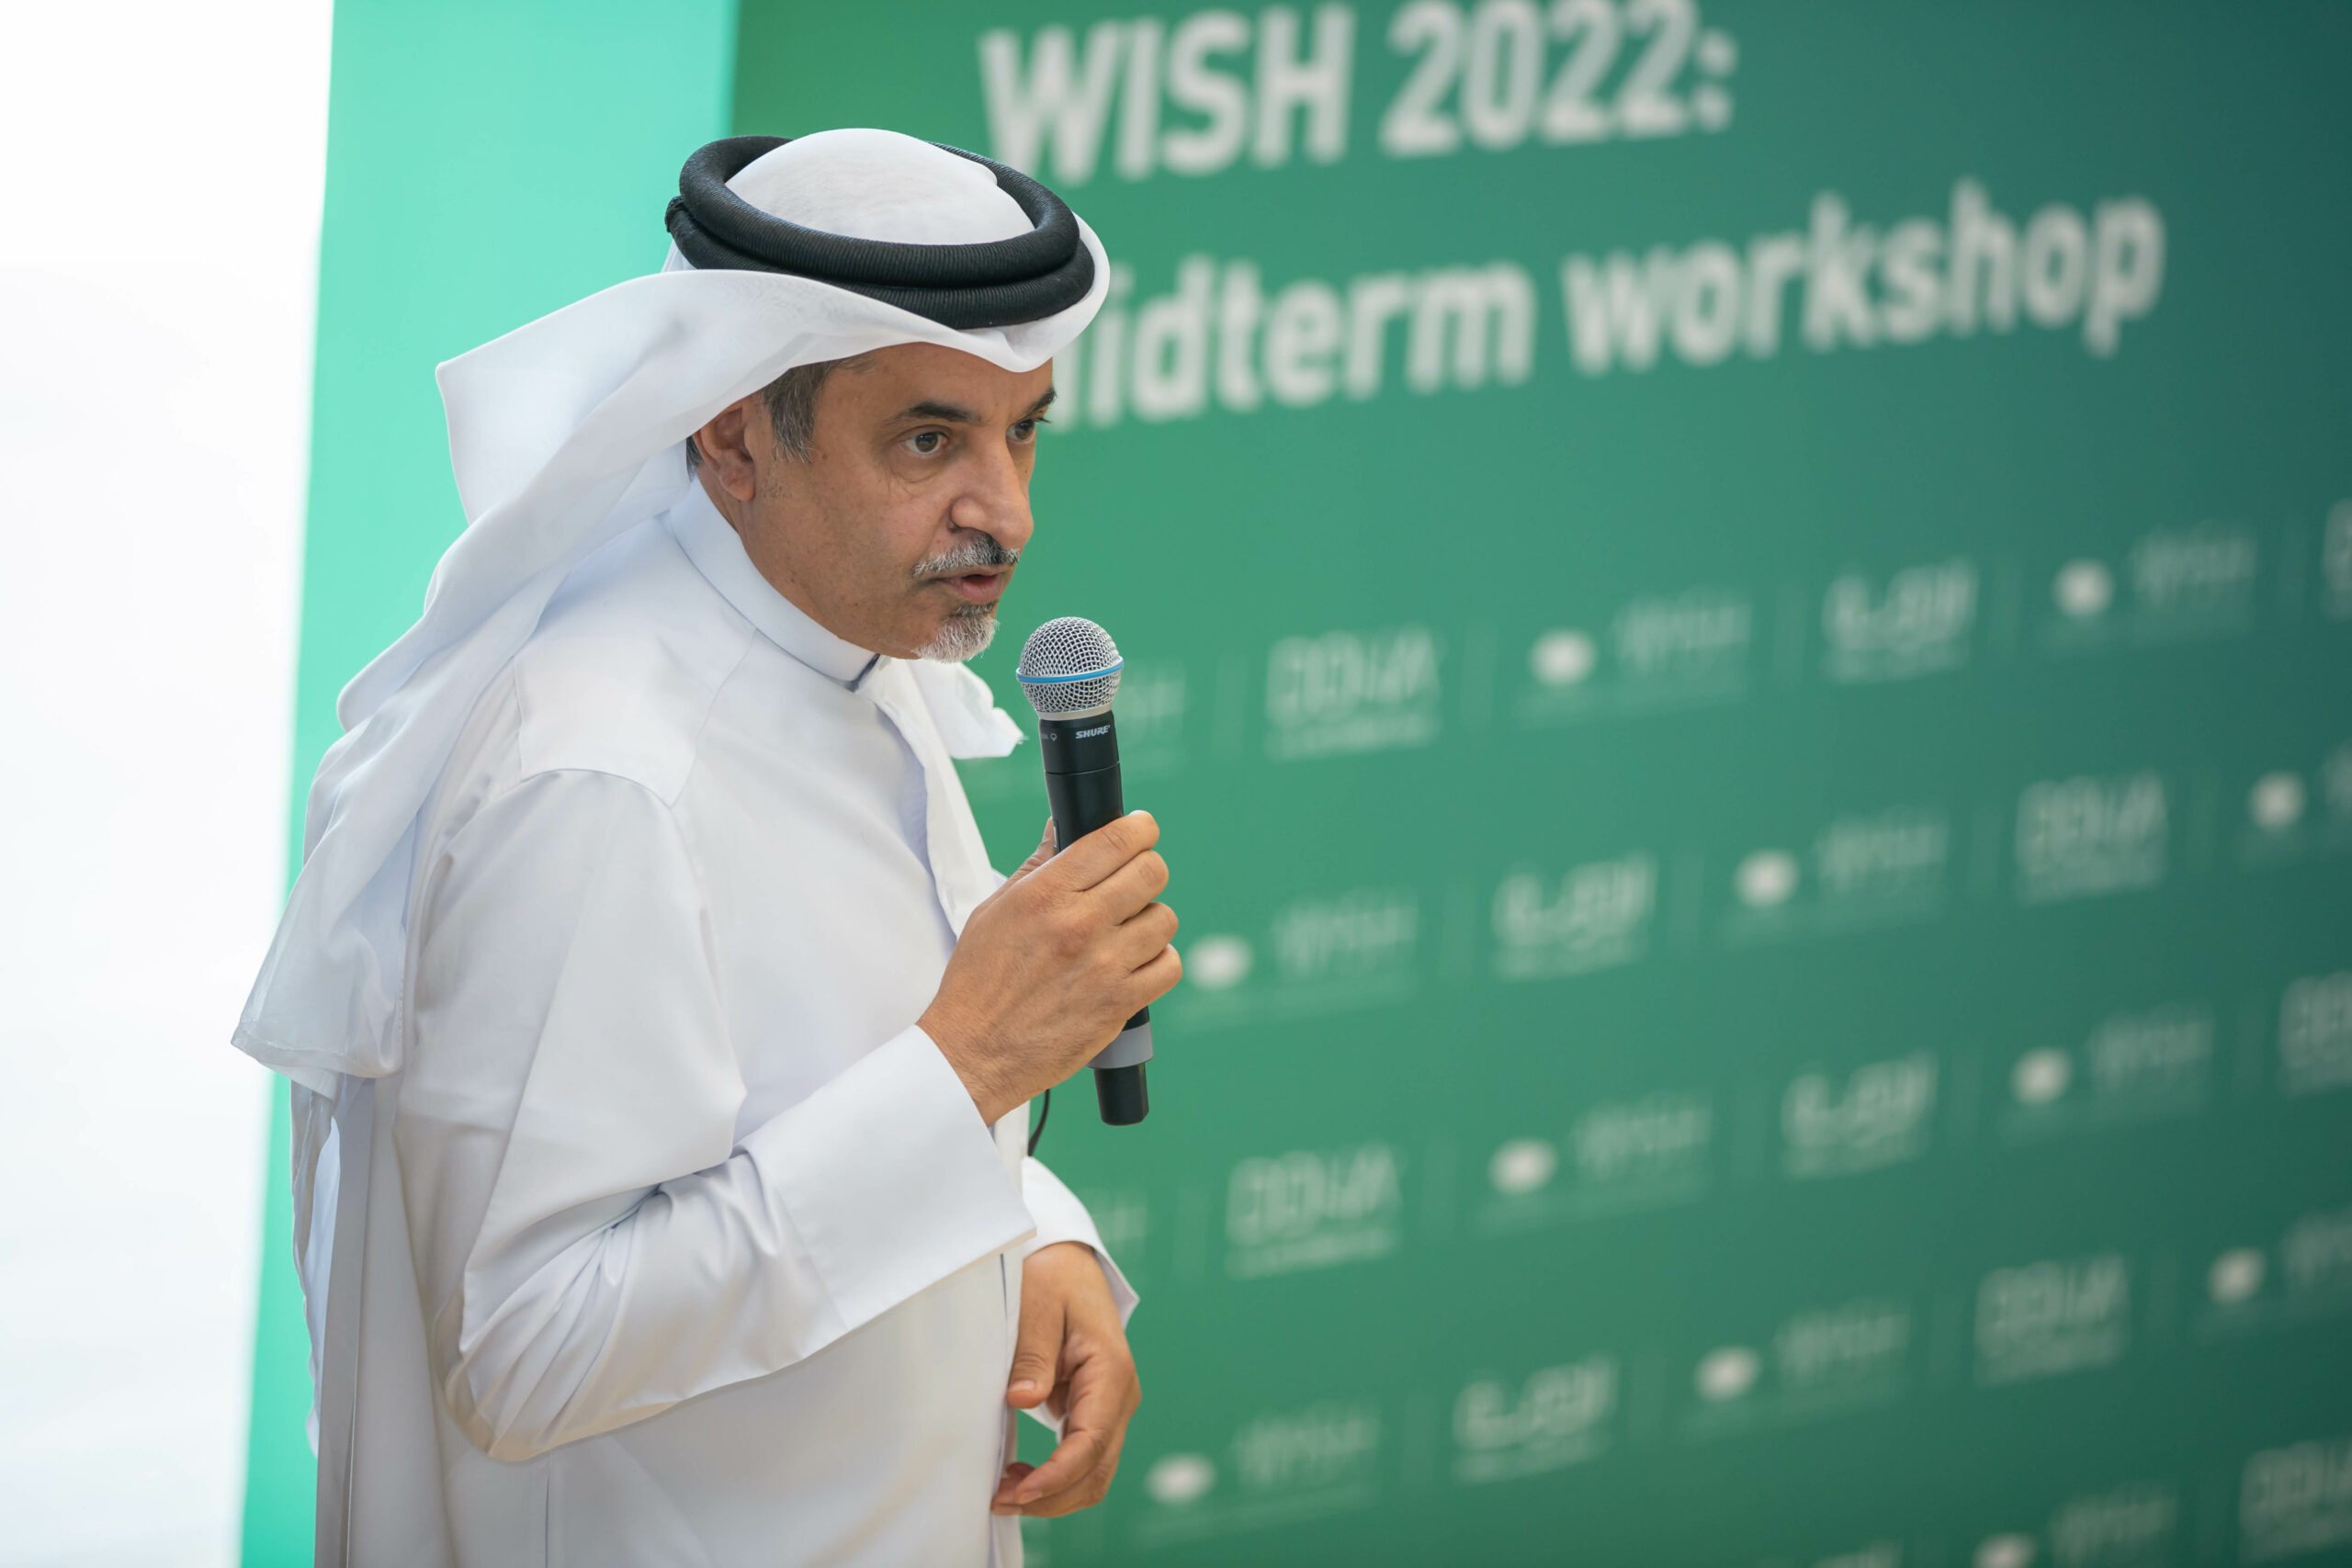 FIFA World Cup Qatar 2022™ And Legacy Of Covid-19 Among Central Themes At Upcoming WISH 2022 Summit